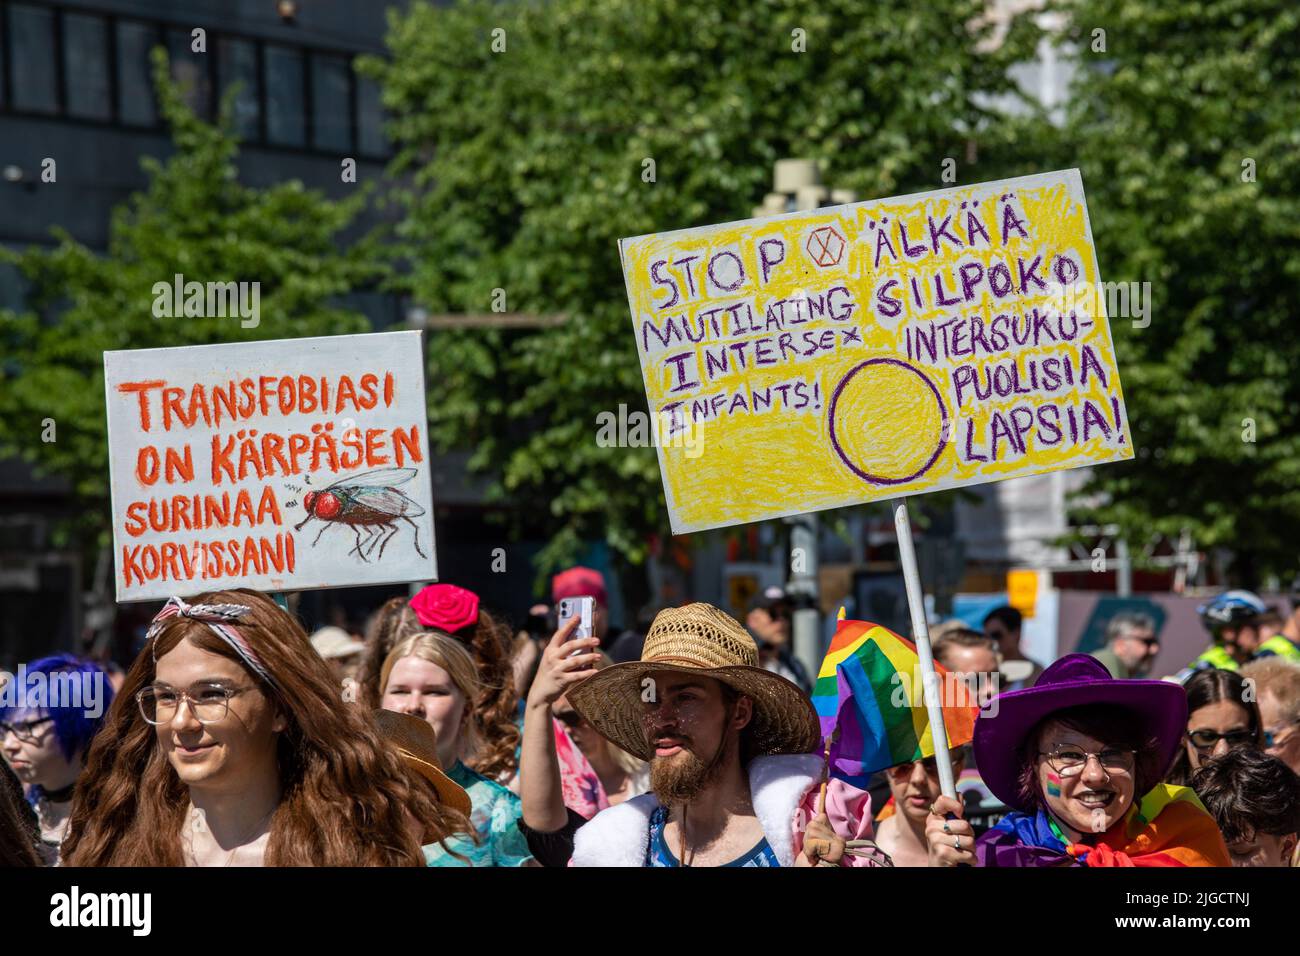 Stop mutilating intersex infants. Sign at Helsinki Pride 2022 Parade in Mannerheimintie, Helsinki, Finland. Stock Photo